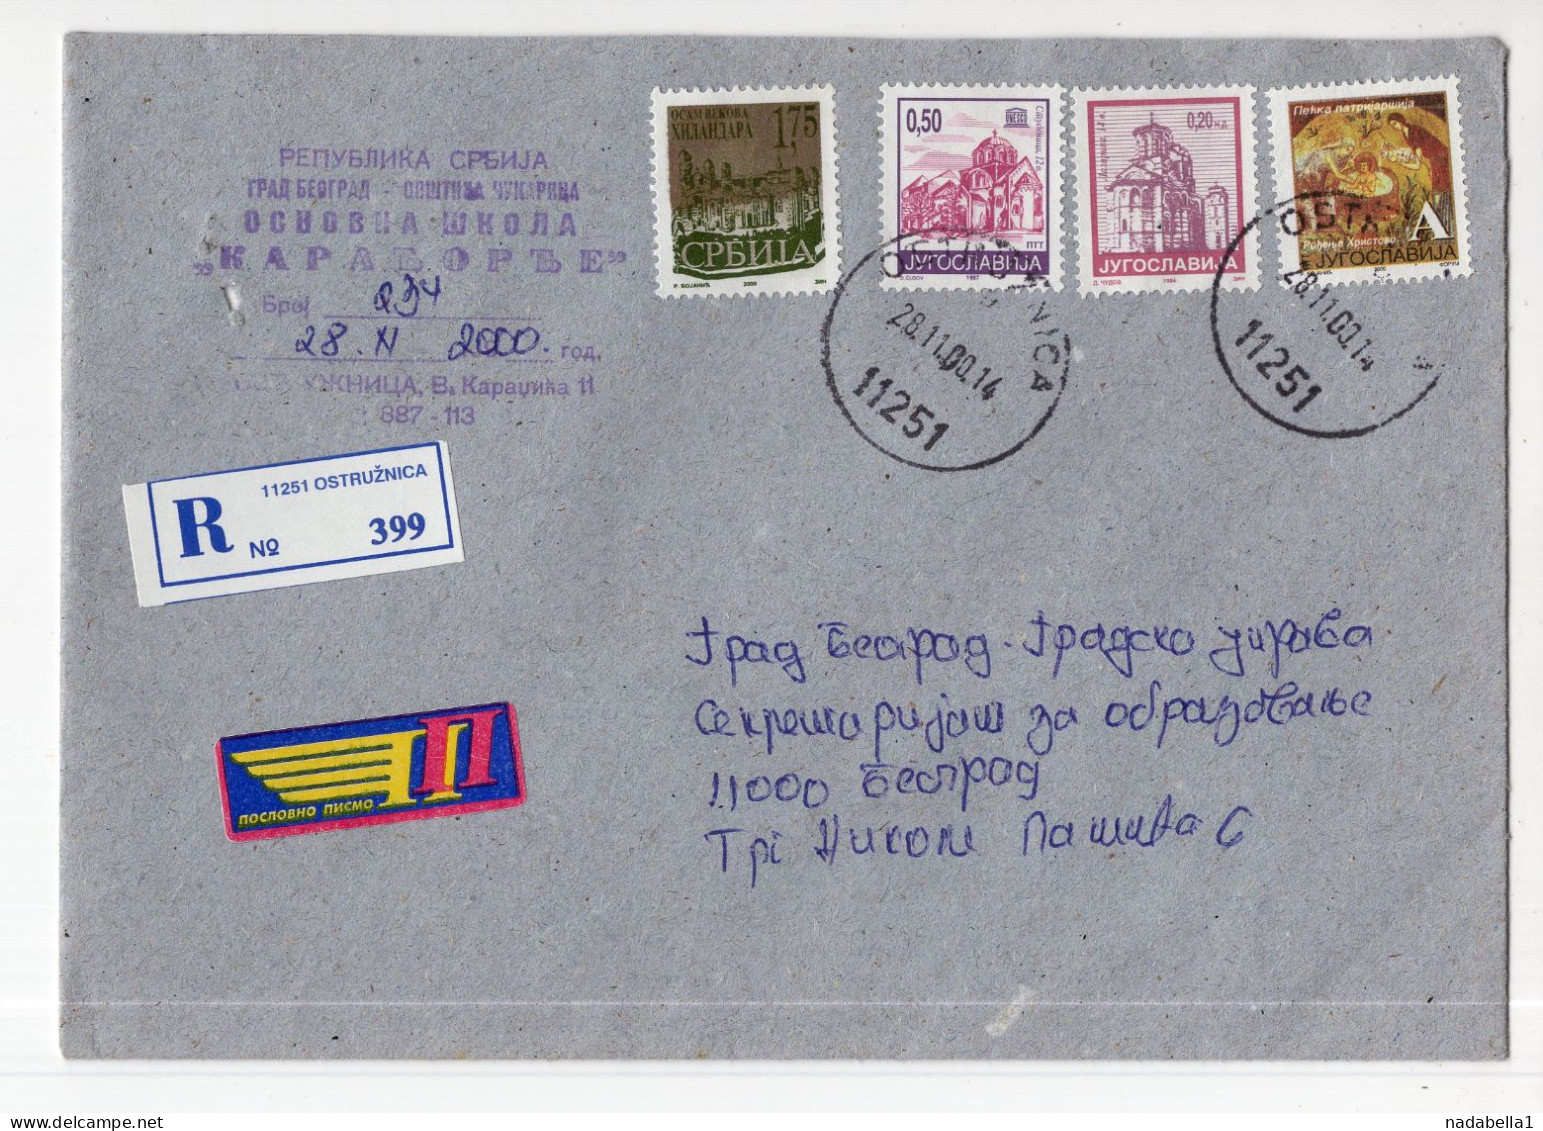 2000. YUGOSLAVIA,SERBIA,OSTRUZNICA,COVER,4 SERBIAN MONASTERY STAMPS - Lettres & Documents